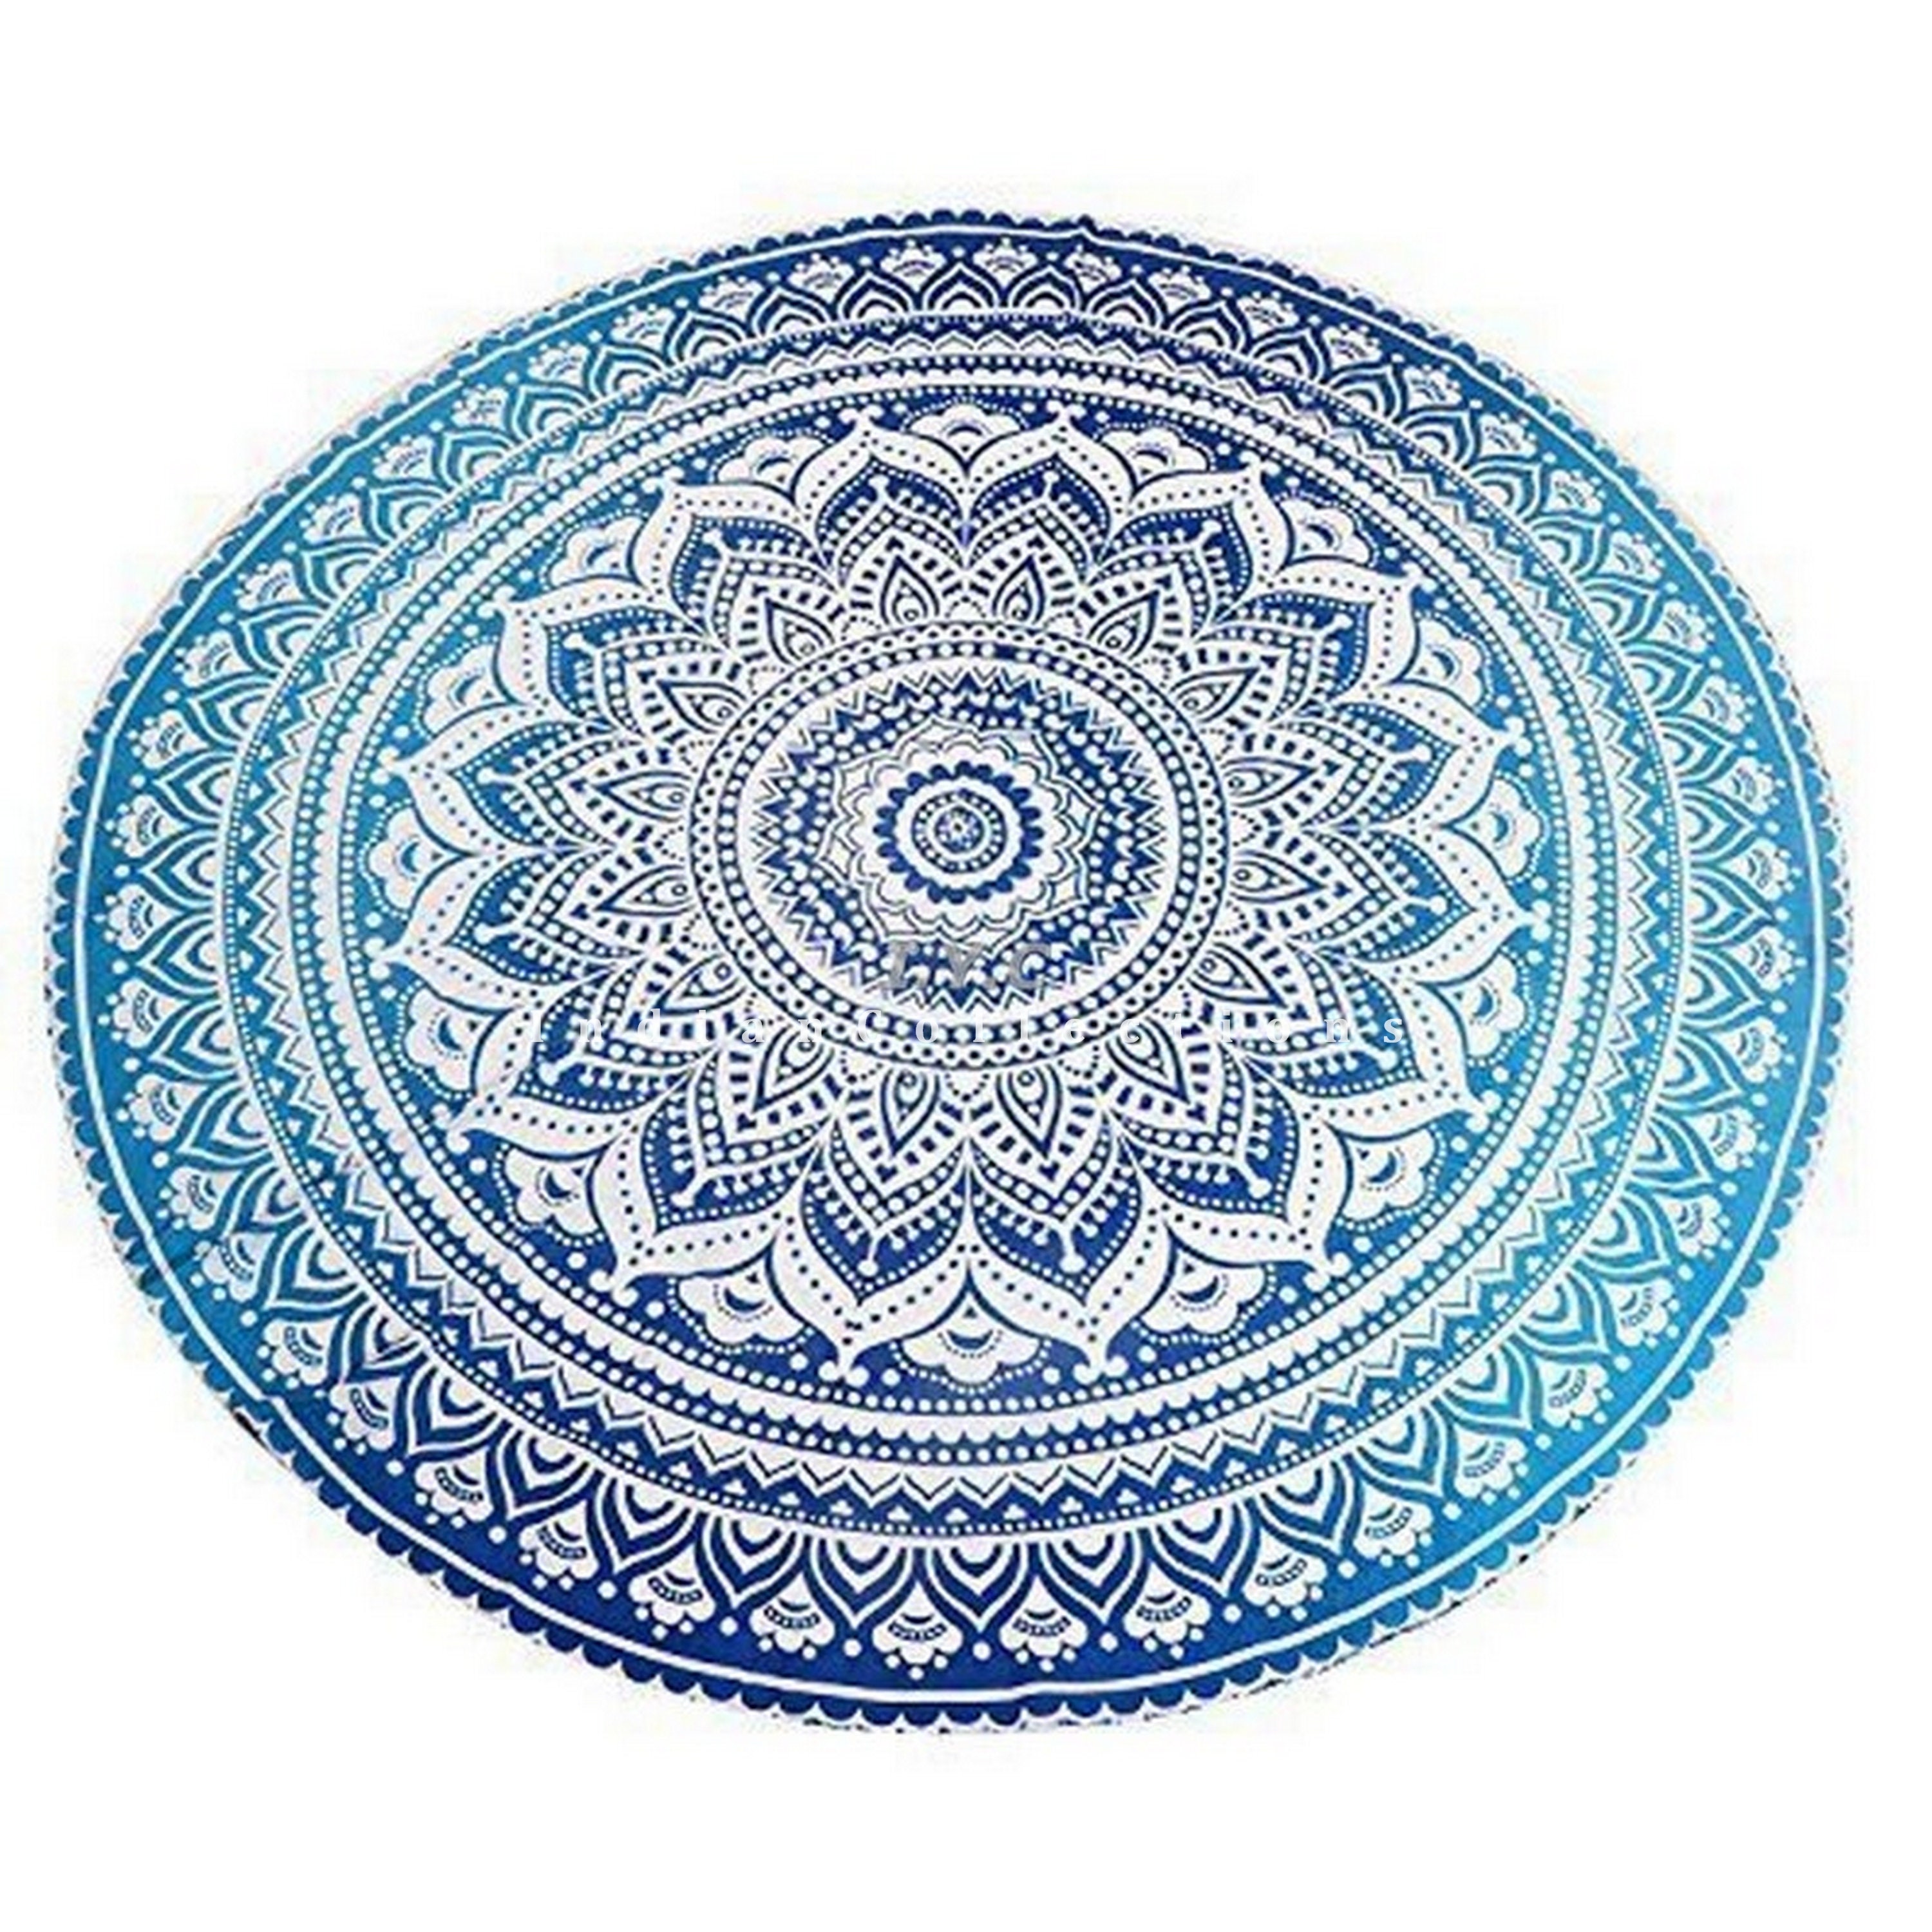 Indian Flower Hippie Mandala Ethnic Round Beach Throw Bohemian Tapestry Yoga Mat 